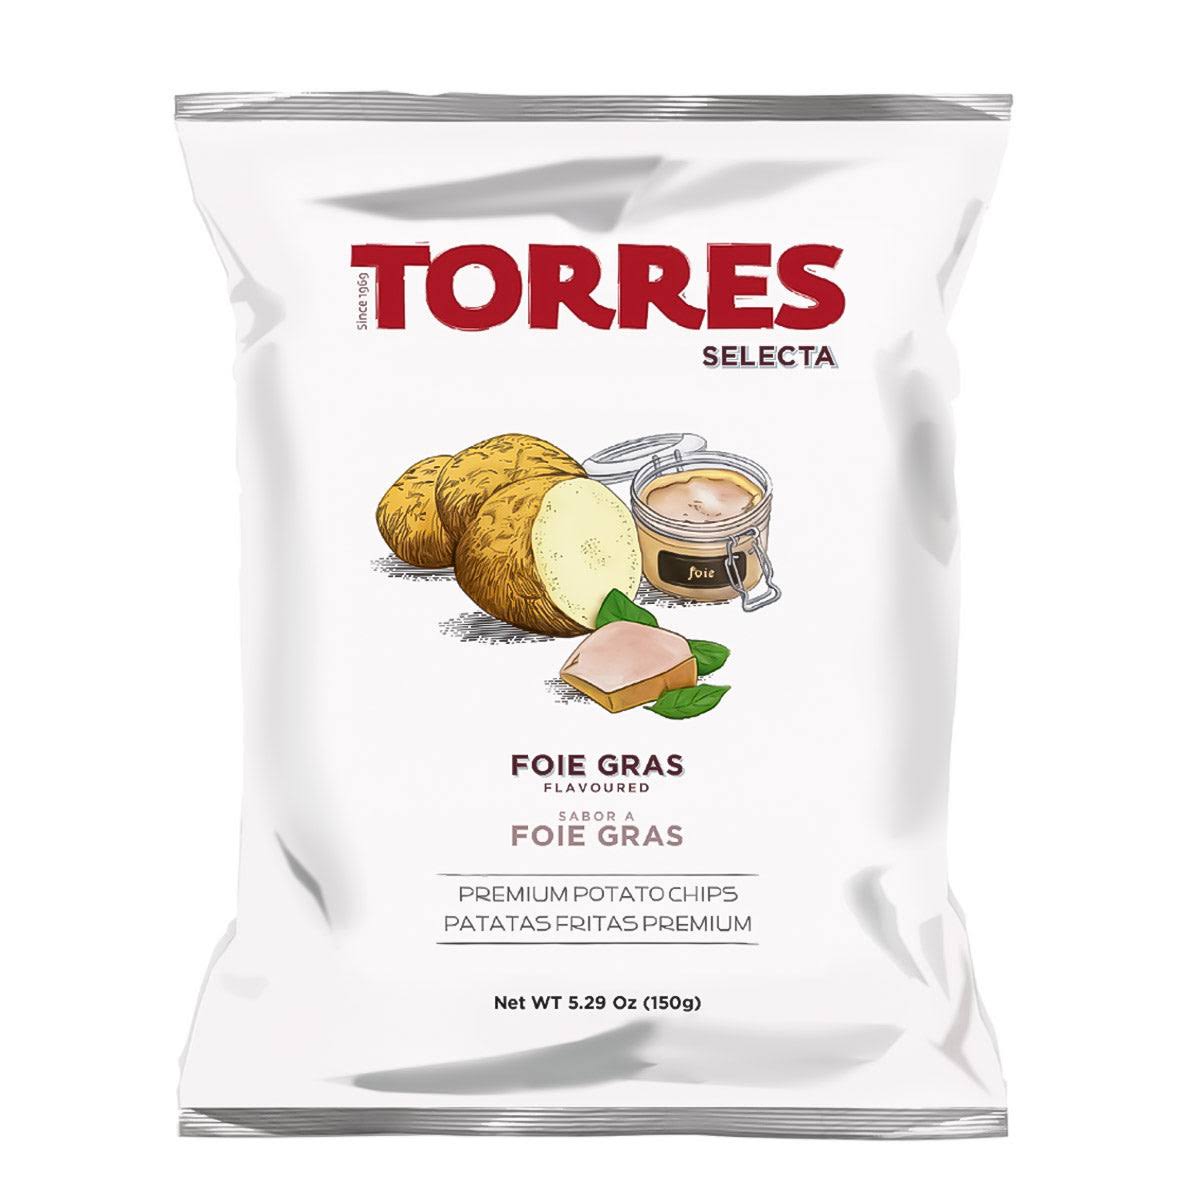 Torres Selecta Premium Potato Chips - Foie Gras Flavored - 5.29 oz